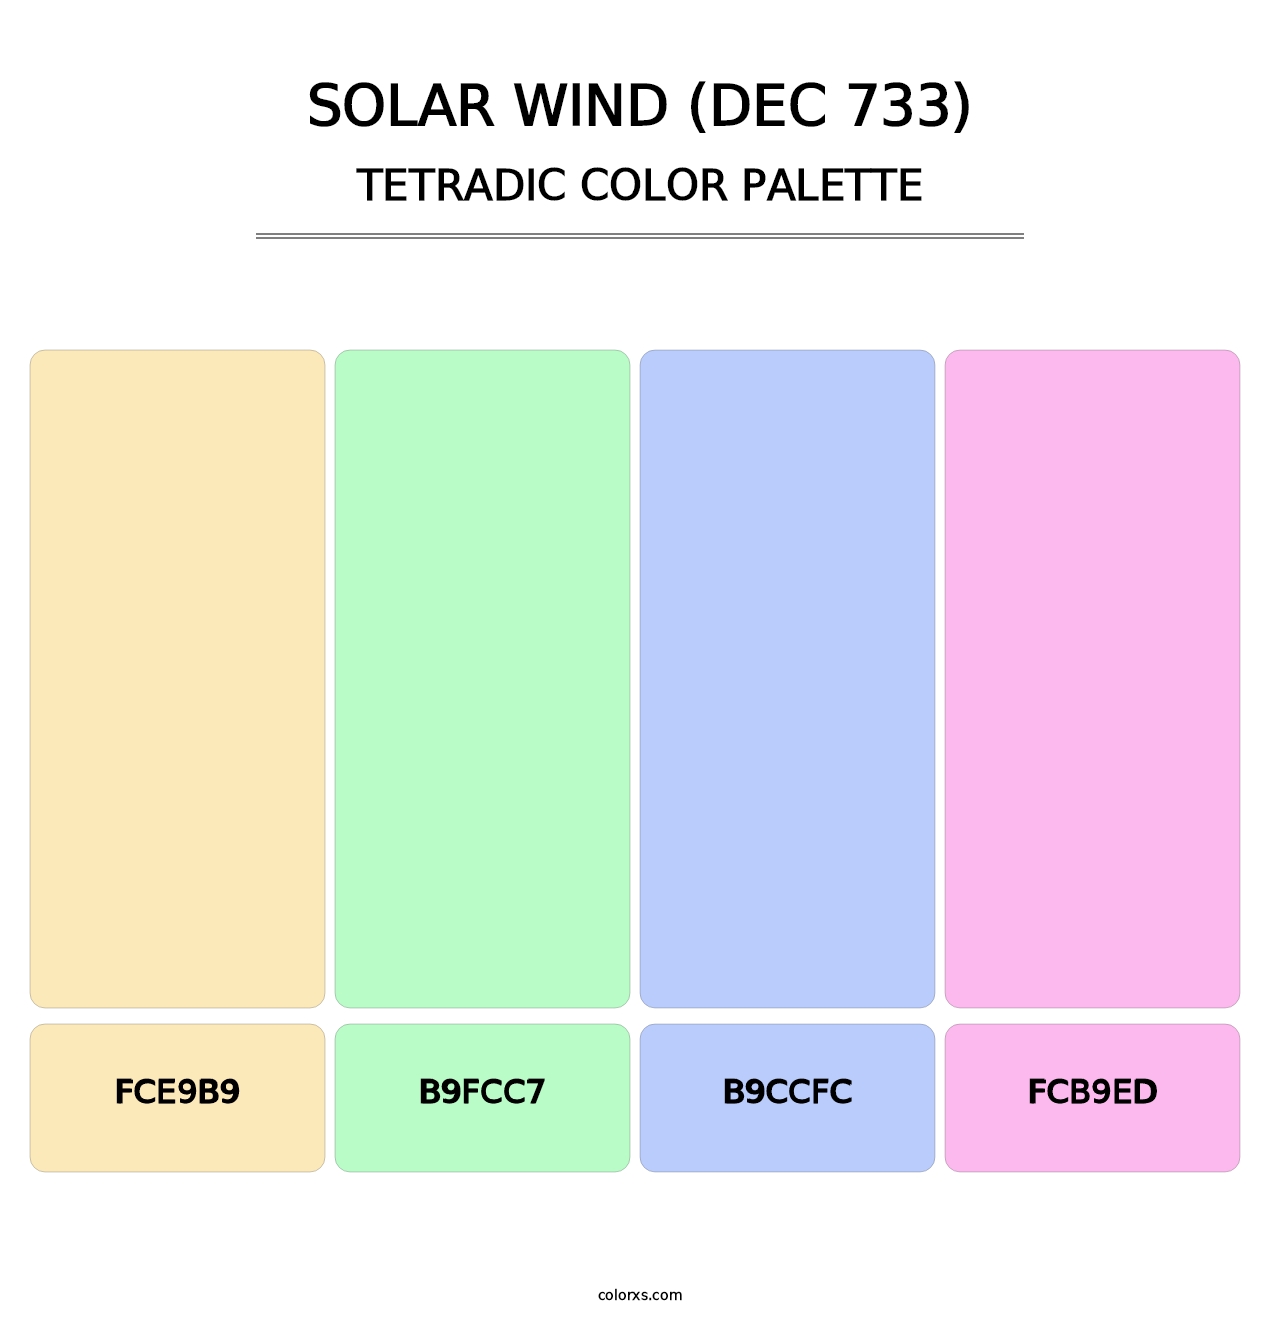 Solar Wind (DEC 733) - Tetradic Color Palette